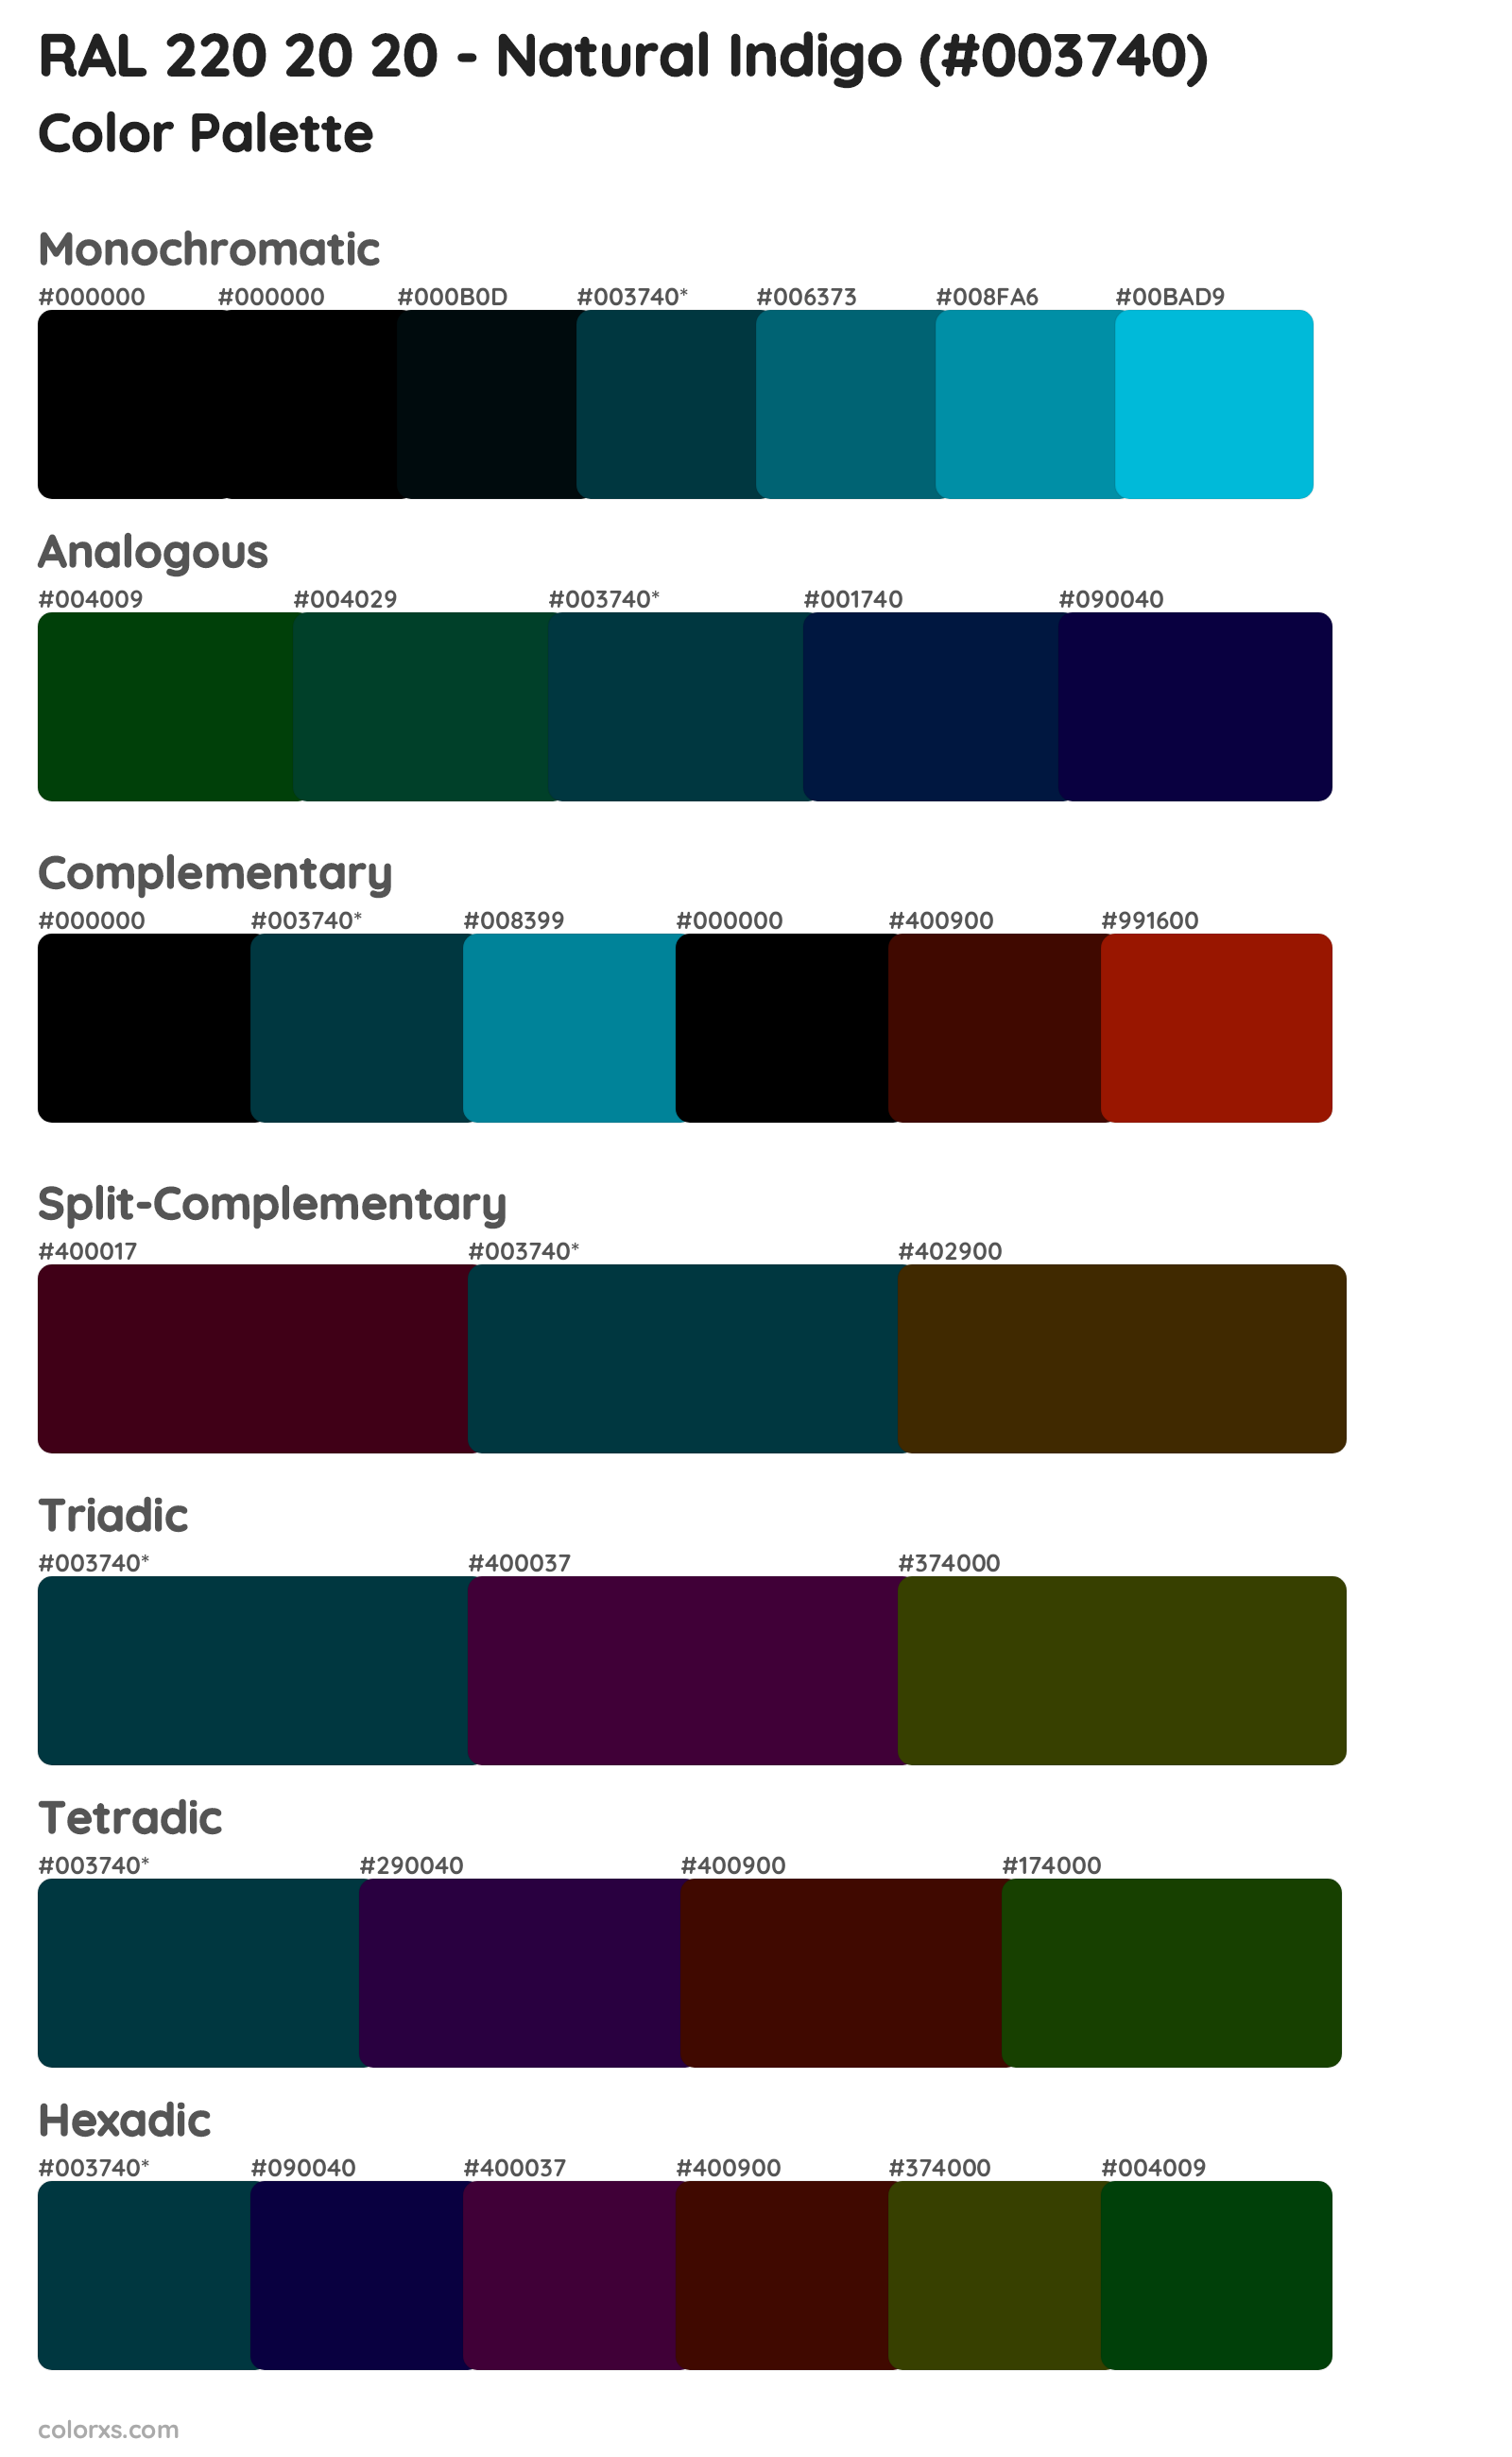 RAL 220 20 20 - Natural Indigo Color Scheme Palettes